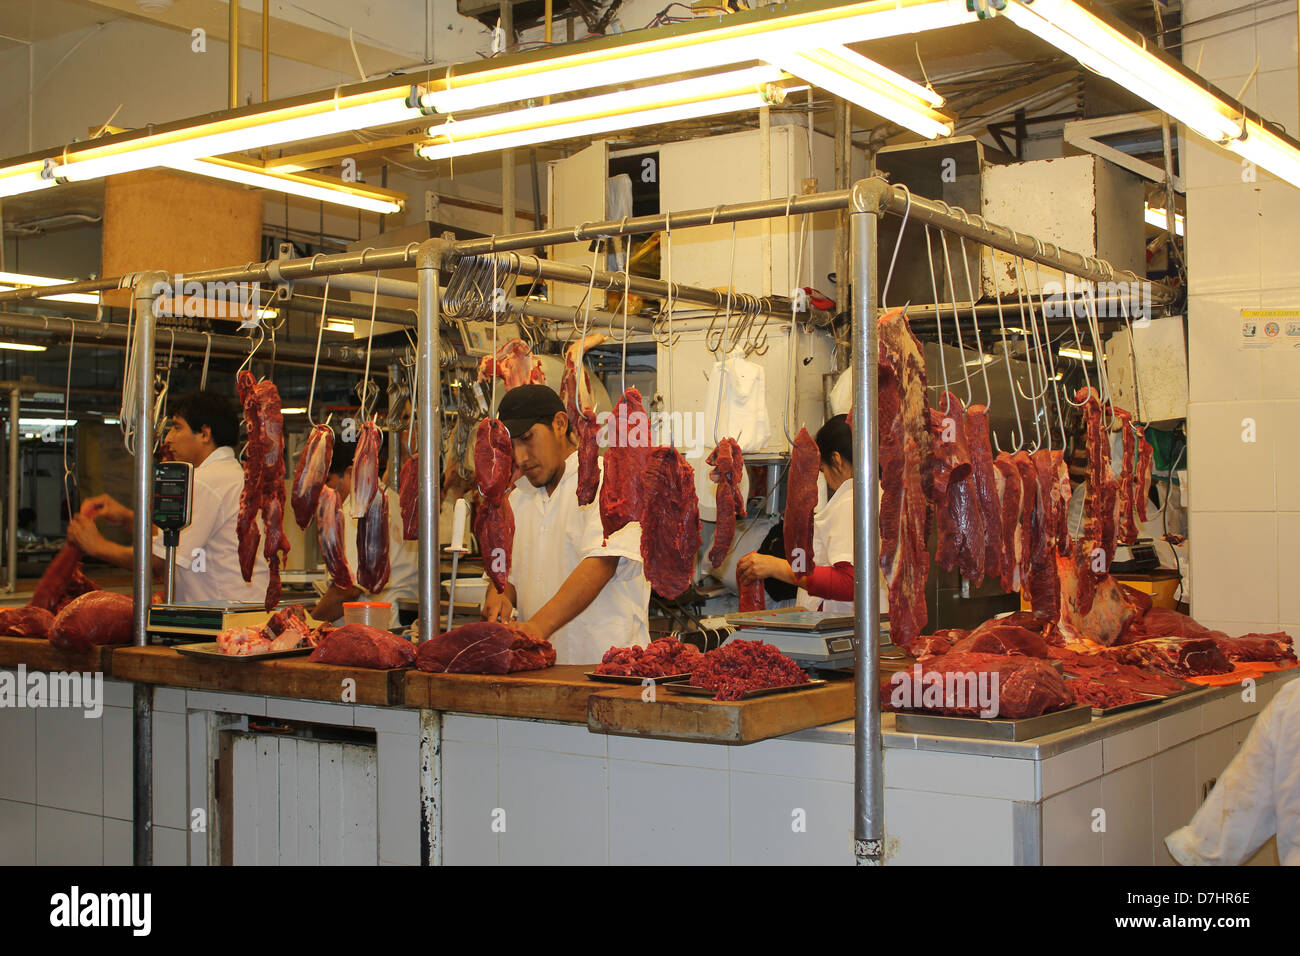 Peru Lima Mercado Central market meat Stock Photo